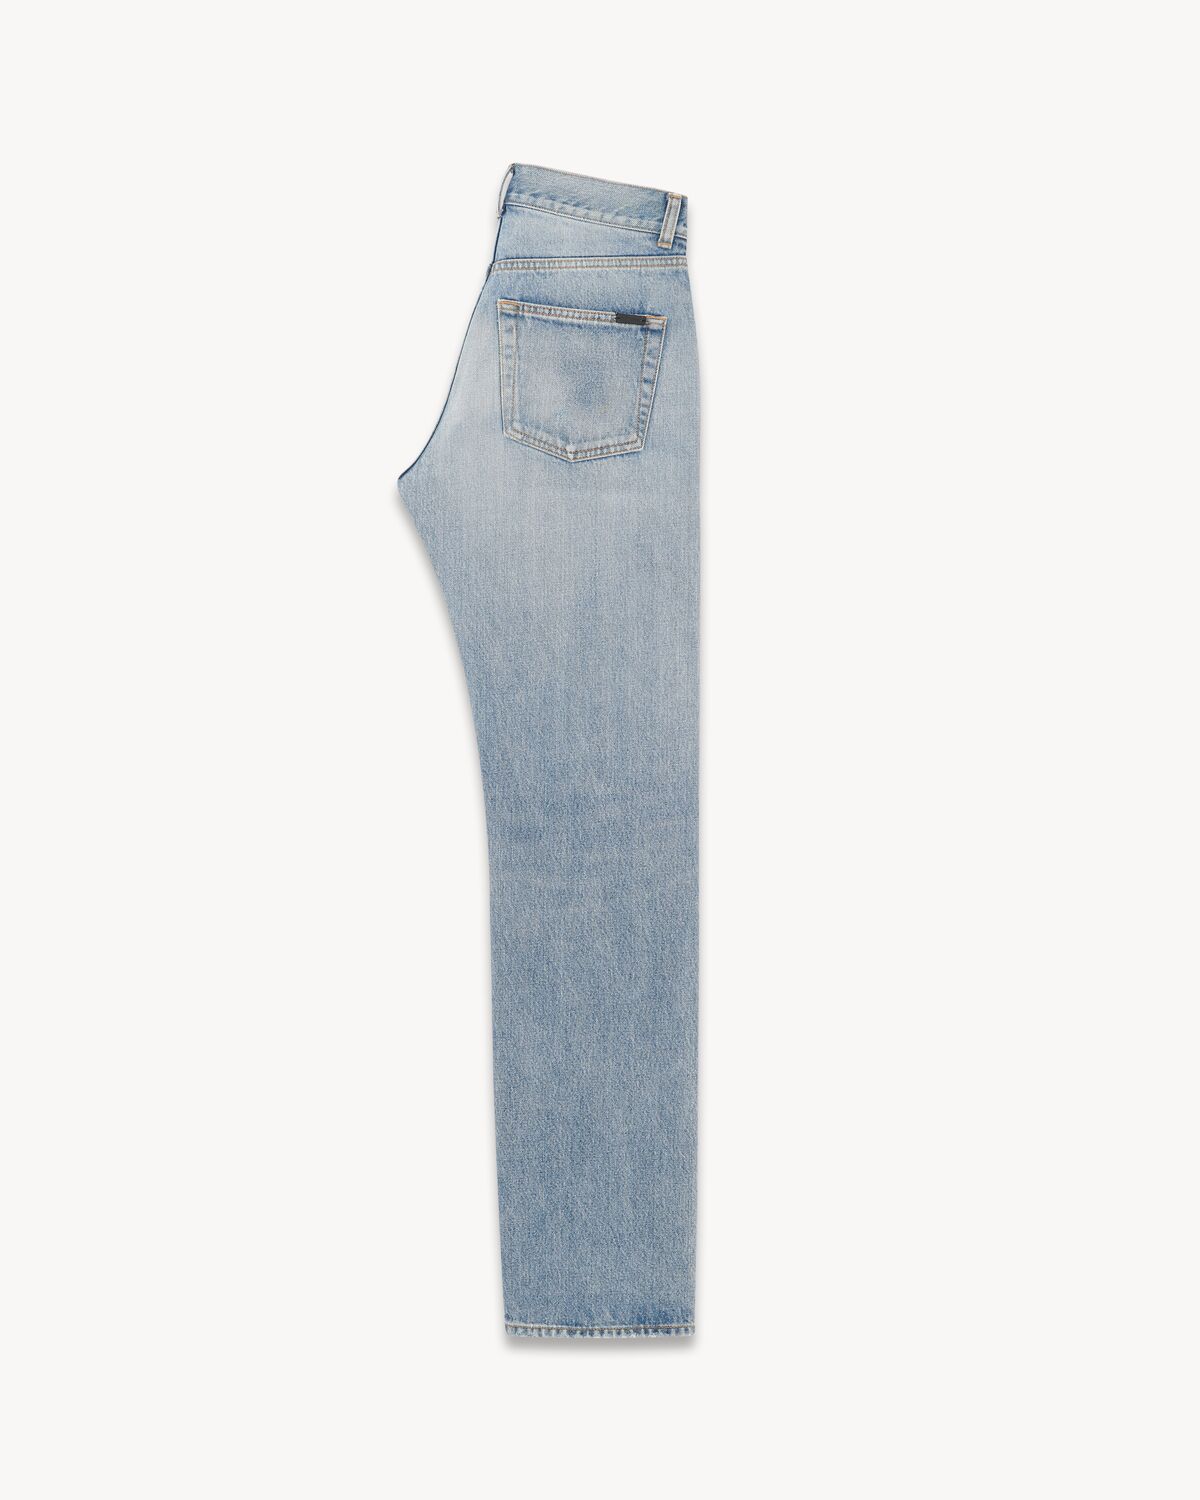 CASSANDRE jeans in hawaii blue denim